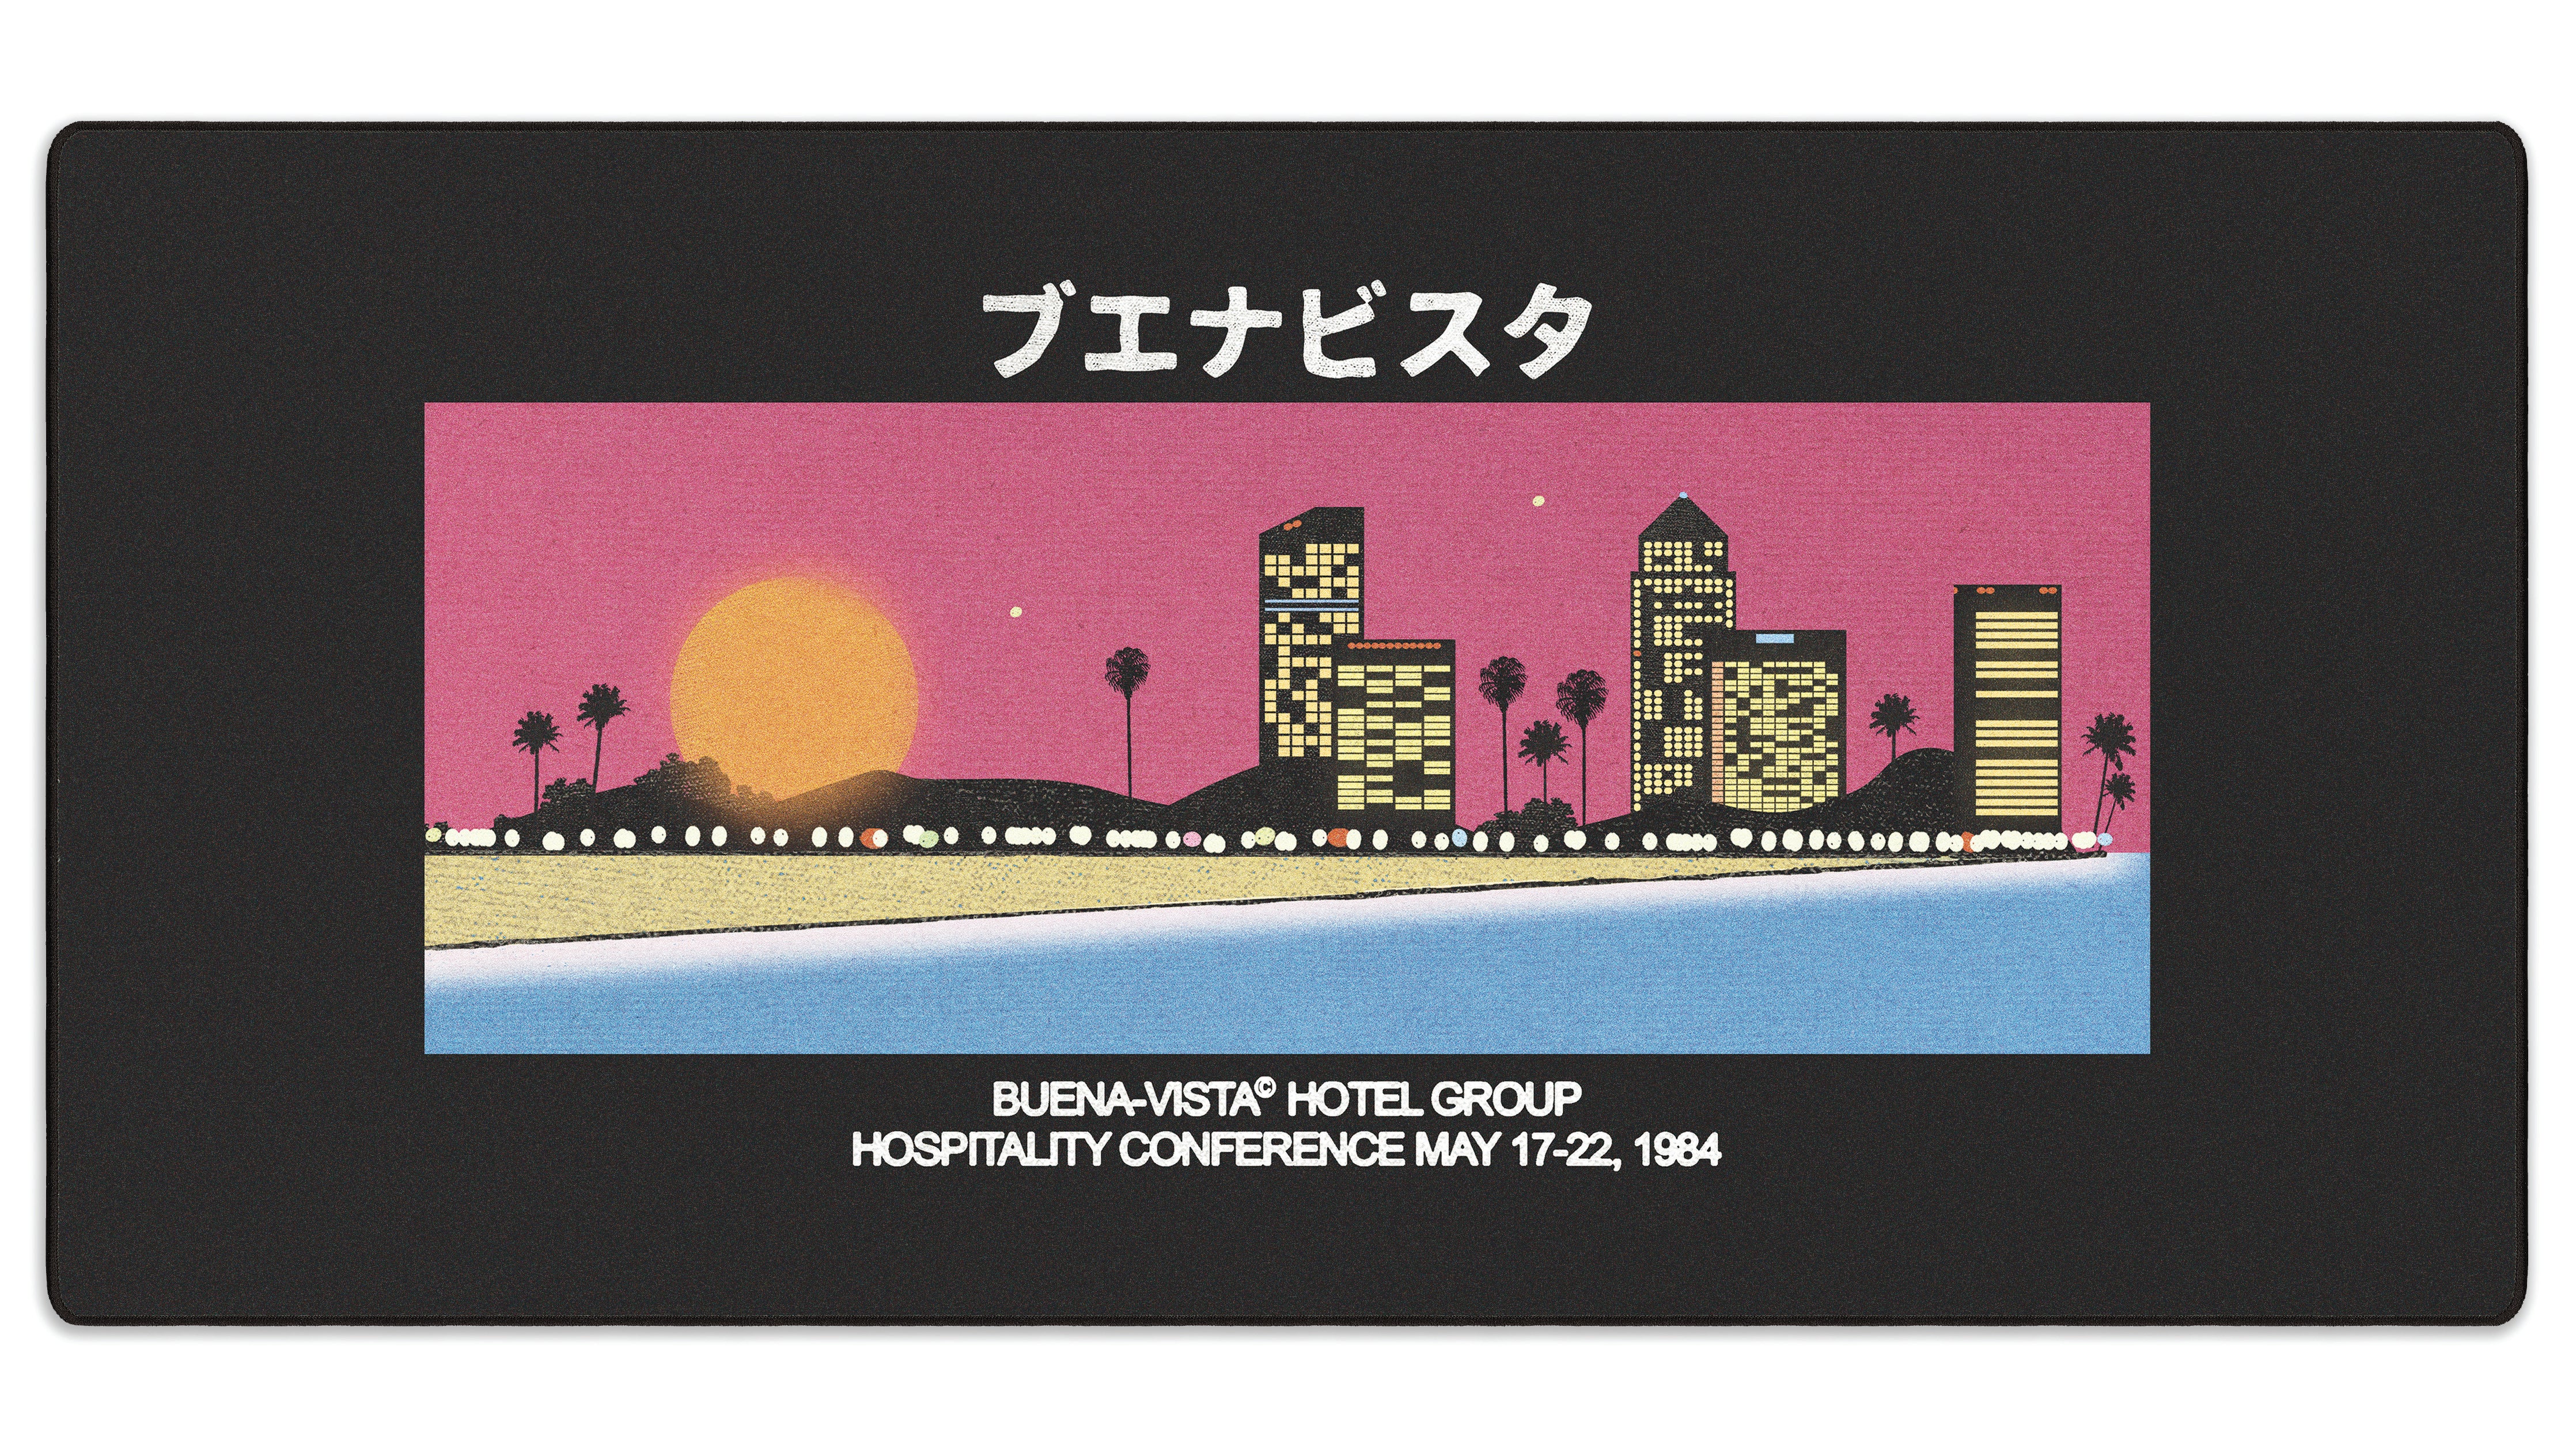 Buena Vista Hotel Club by OZGMX - The Mousepad Company